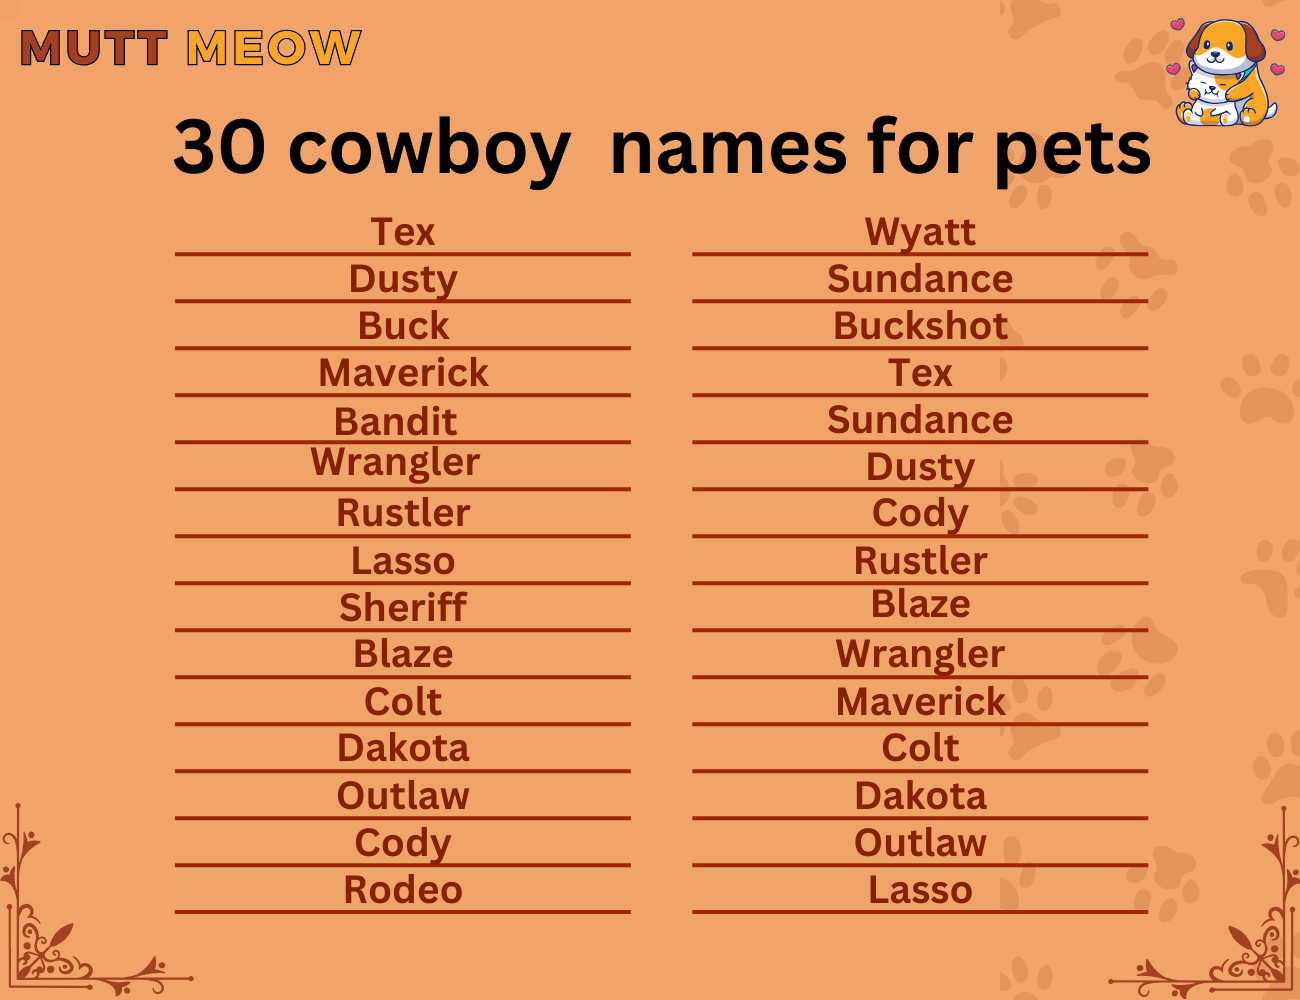 30 cowboy names for pets